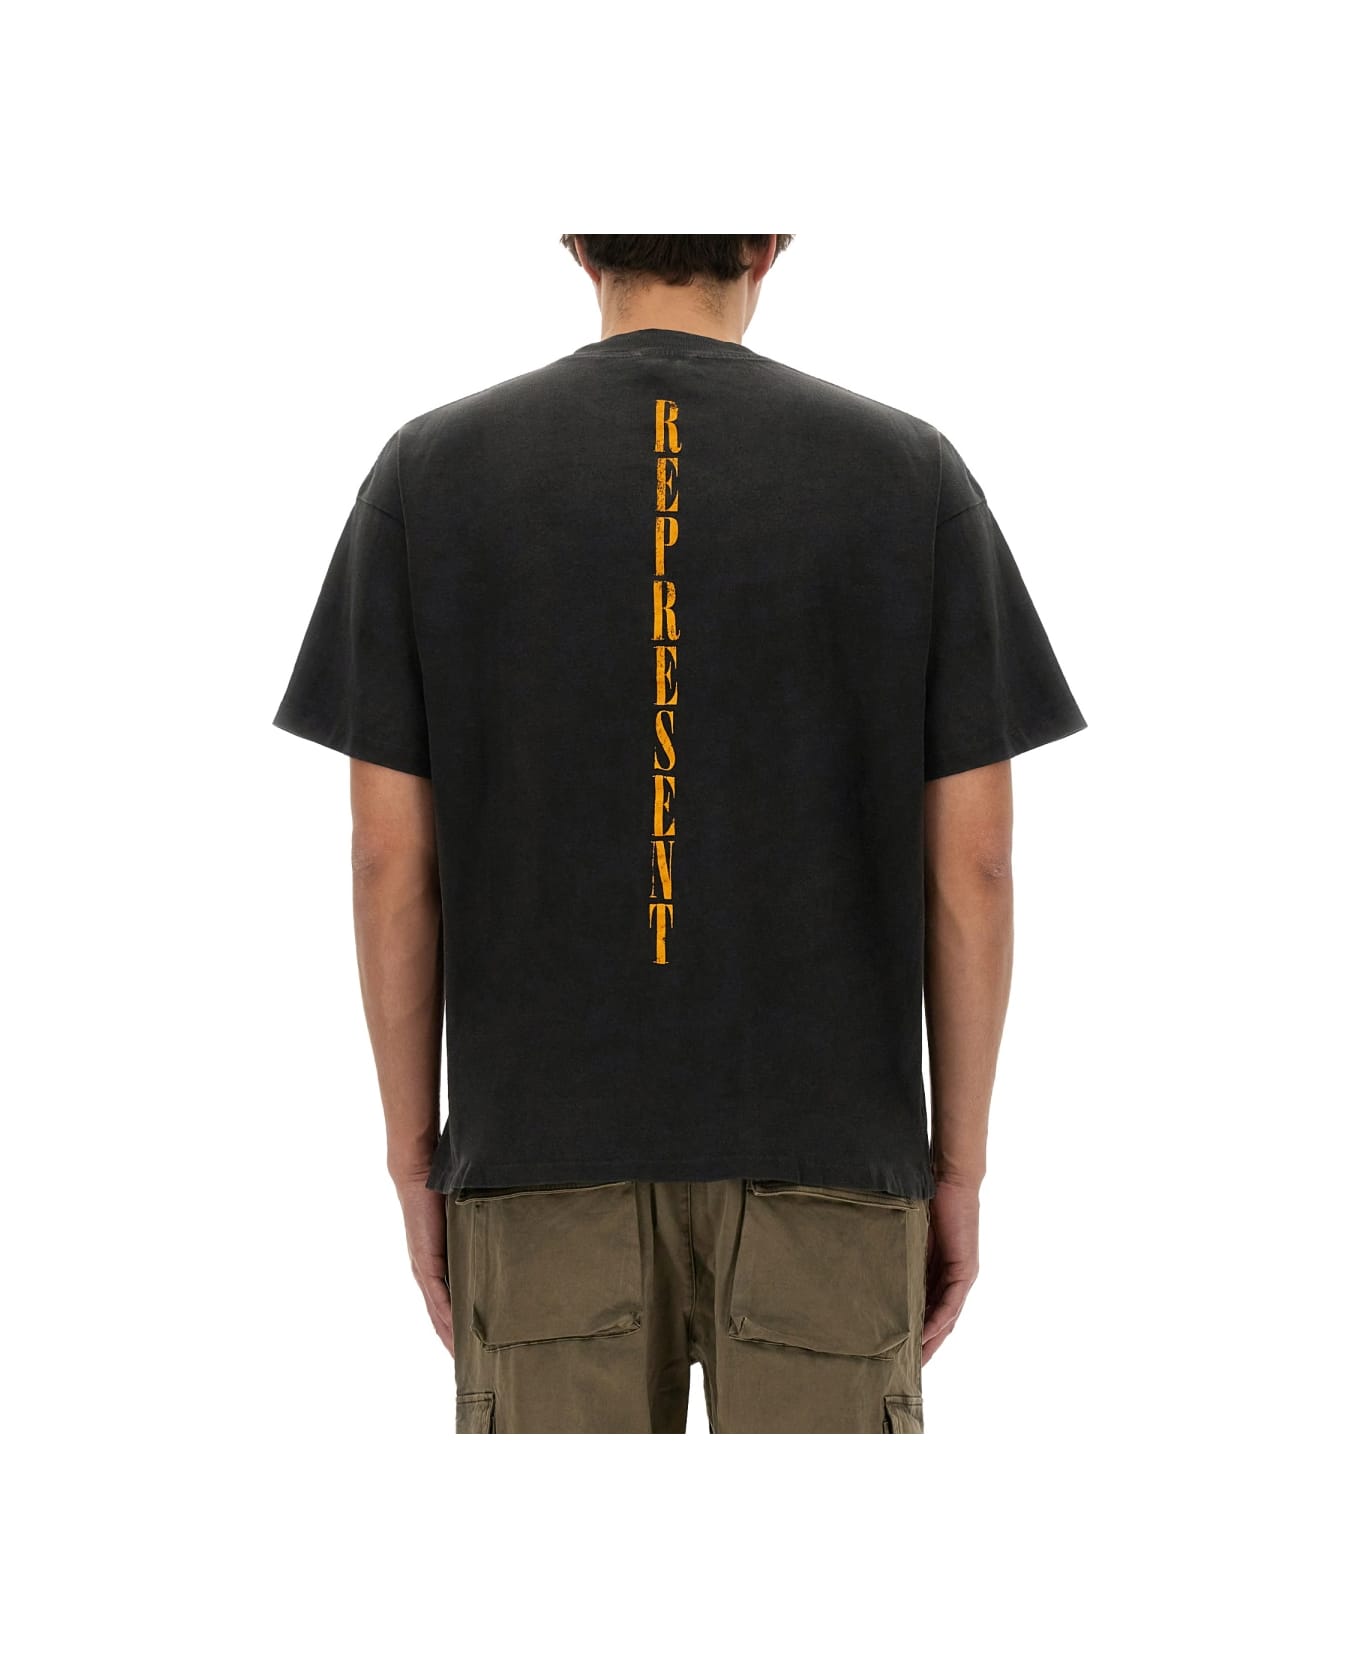 REPRESENT "reborn" Print T-shirt - BLACK